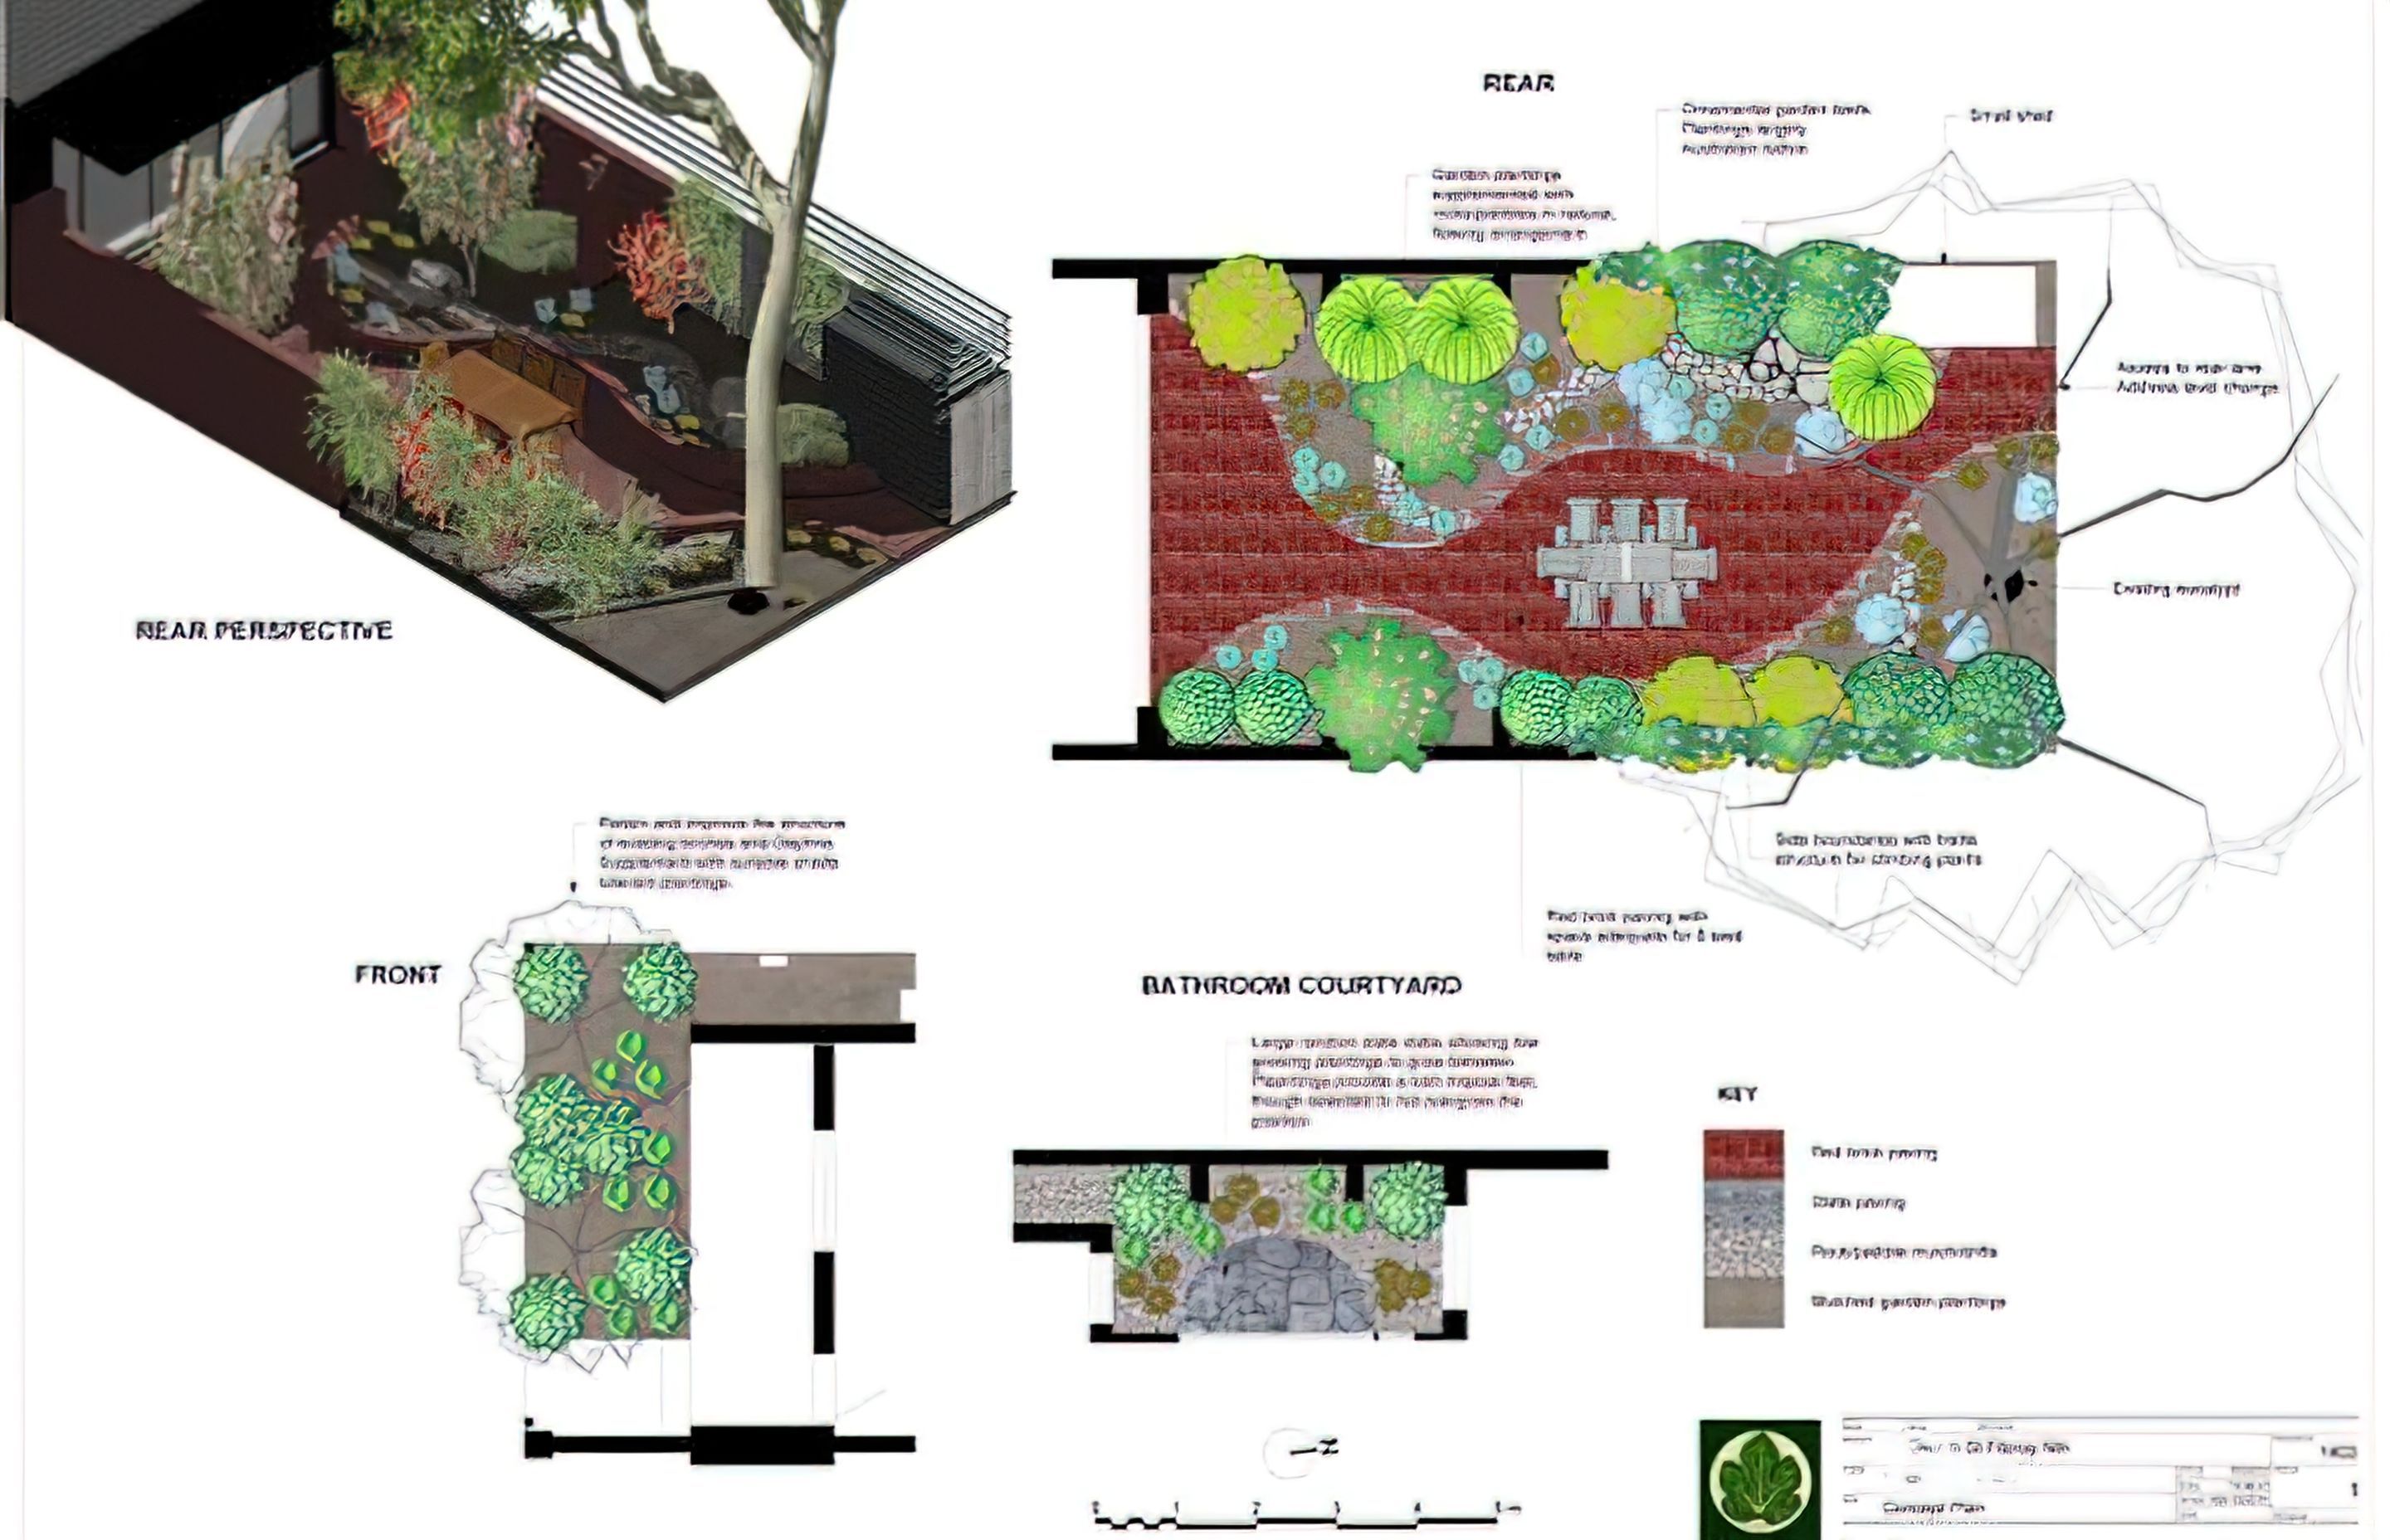 Concept plan for a new courtyard with native garden